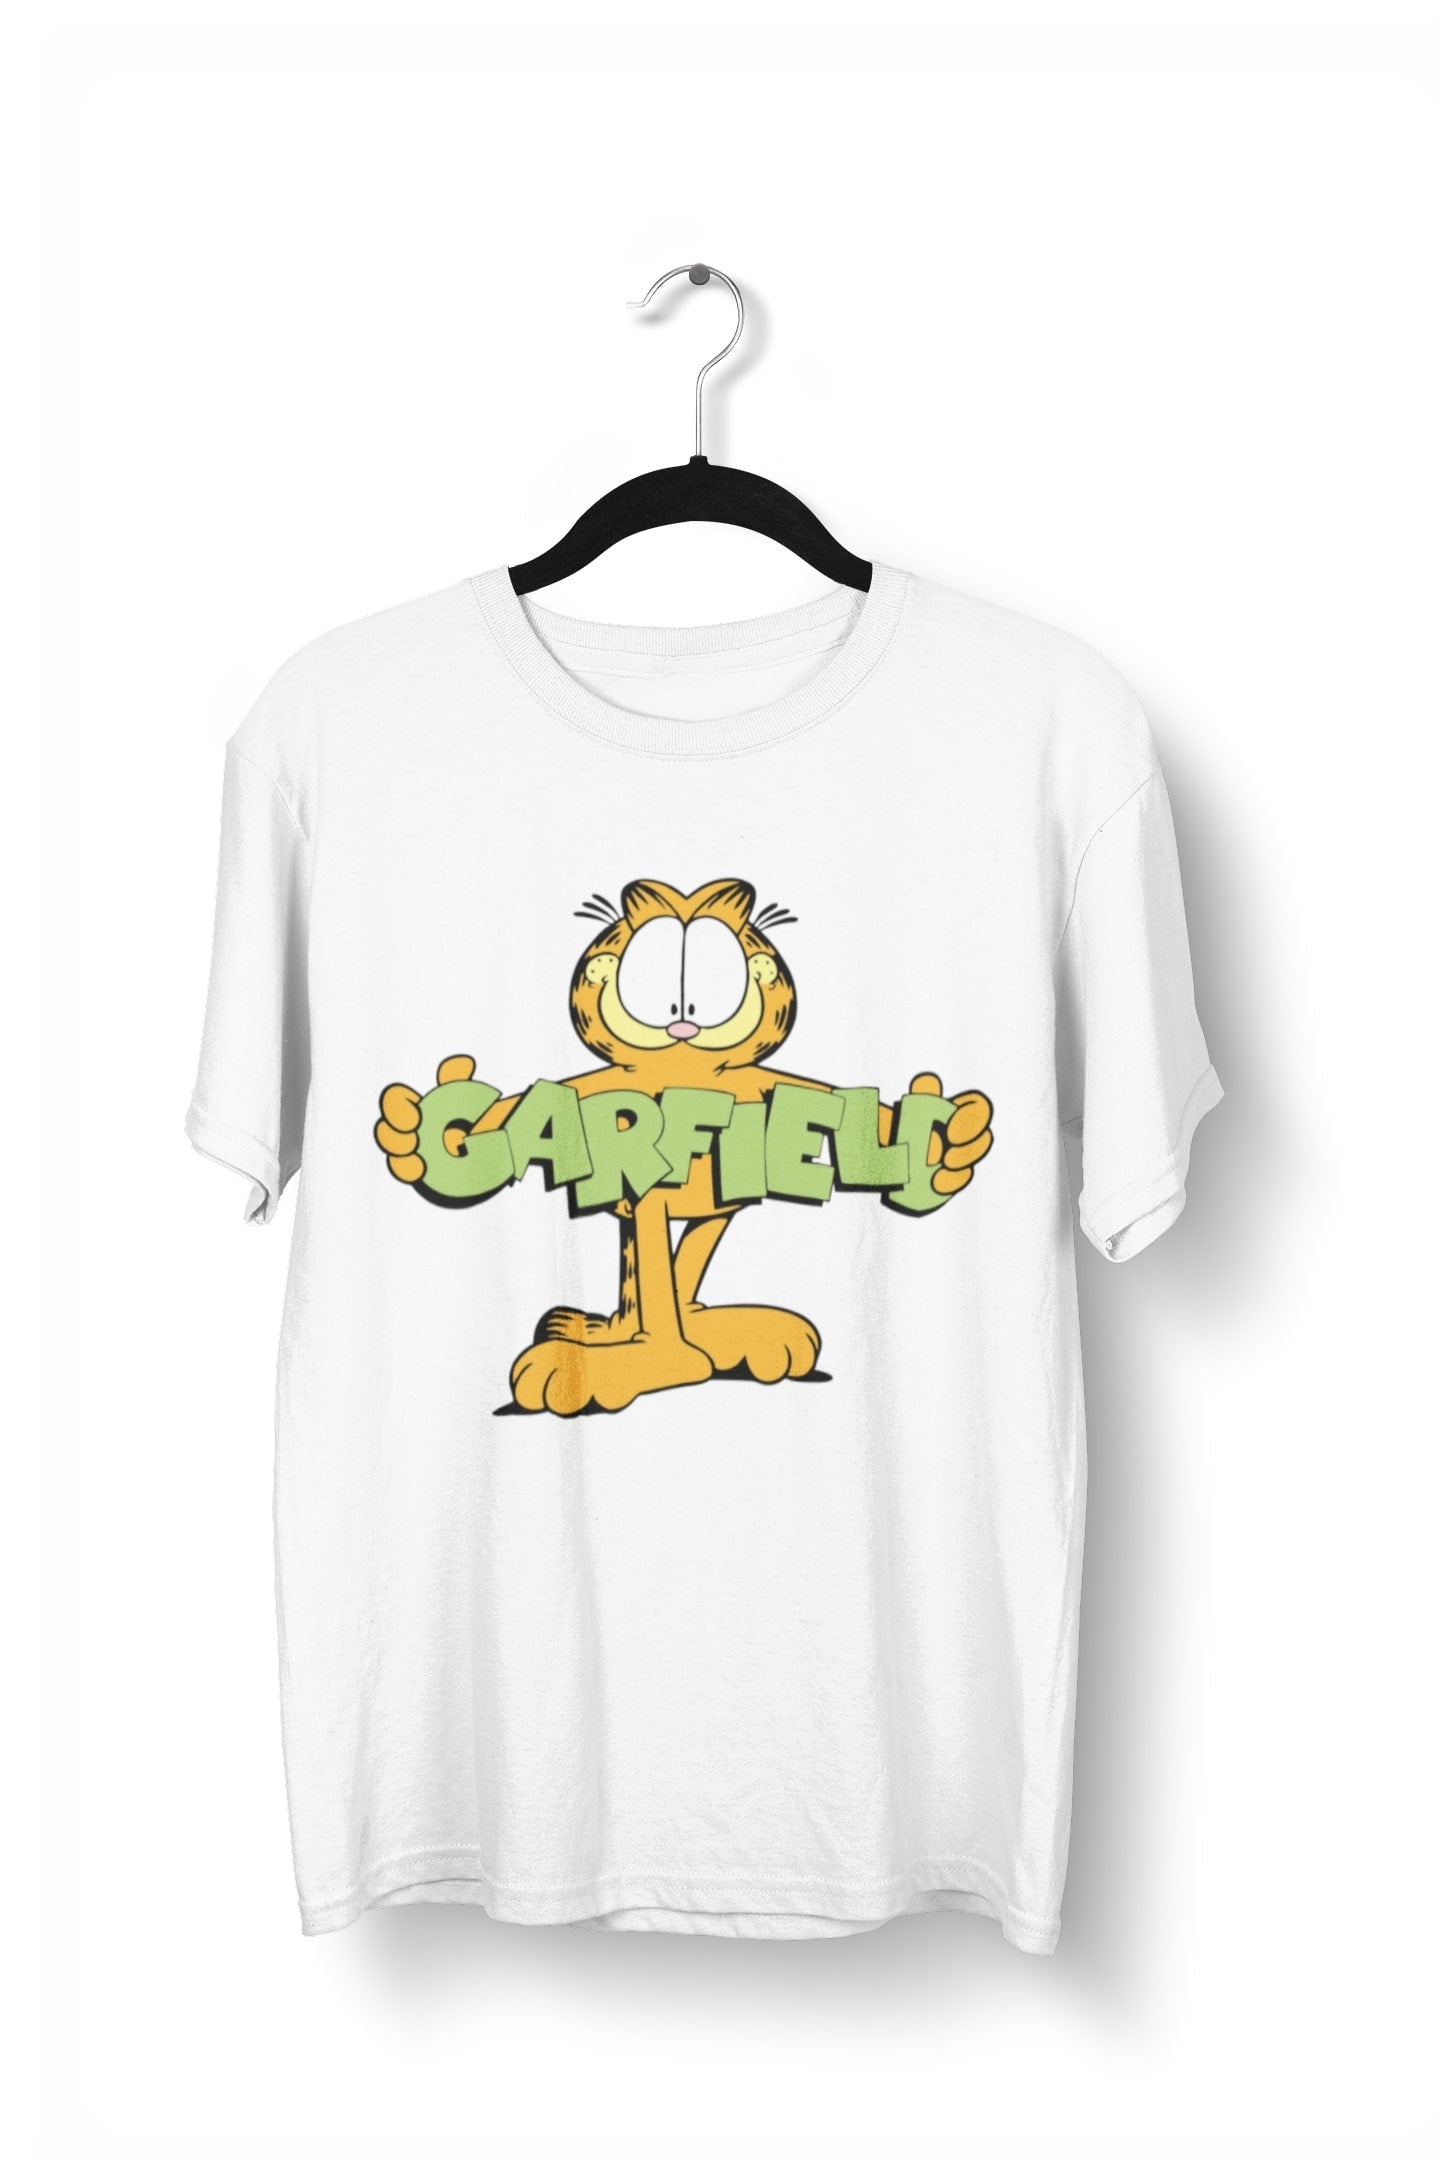 thelegalgang,Garfield - Logo T shirt for Men,MEN.